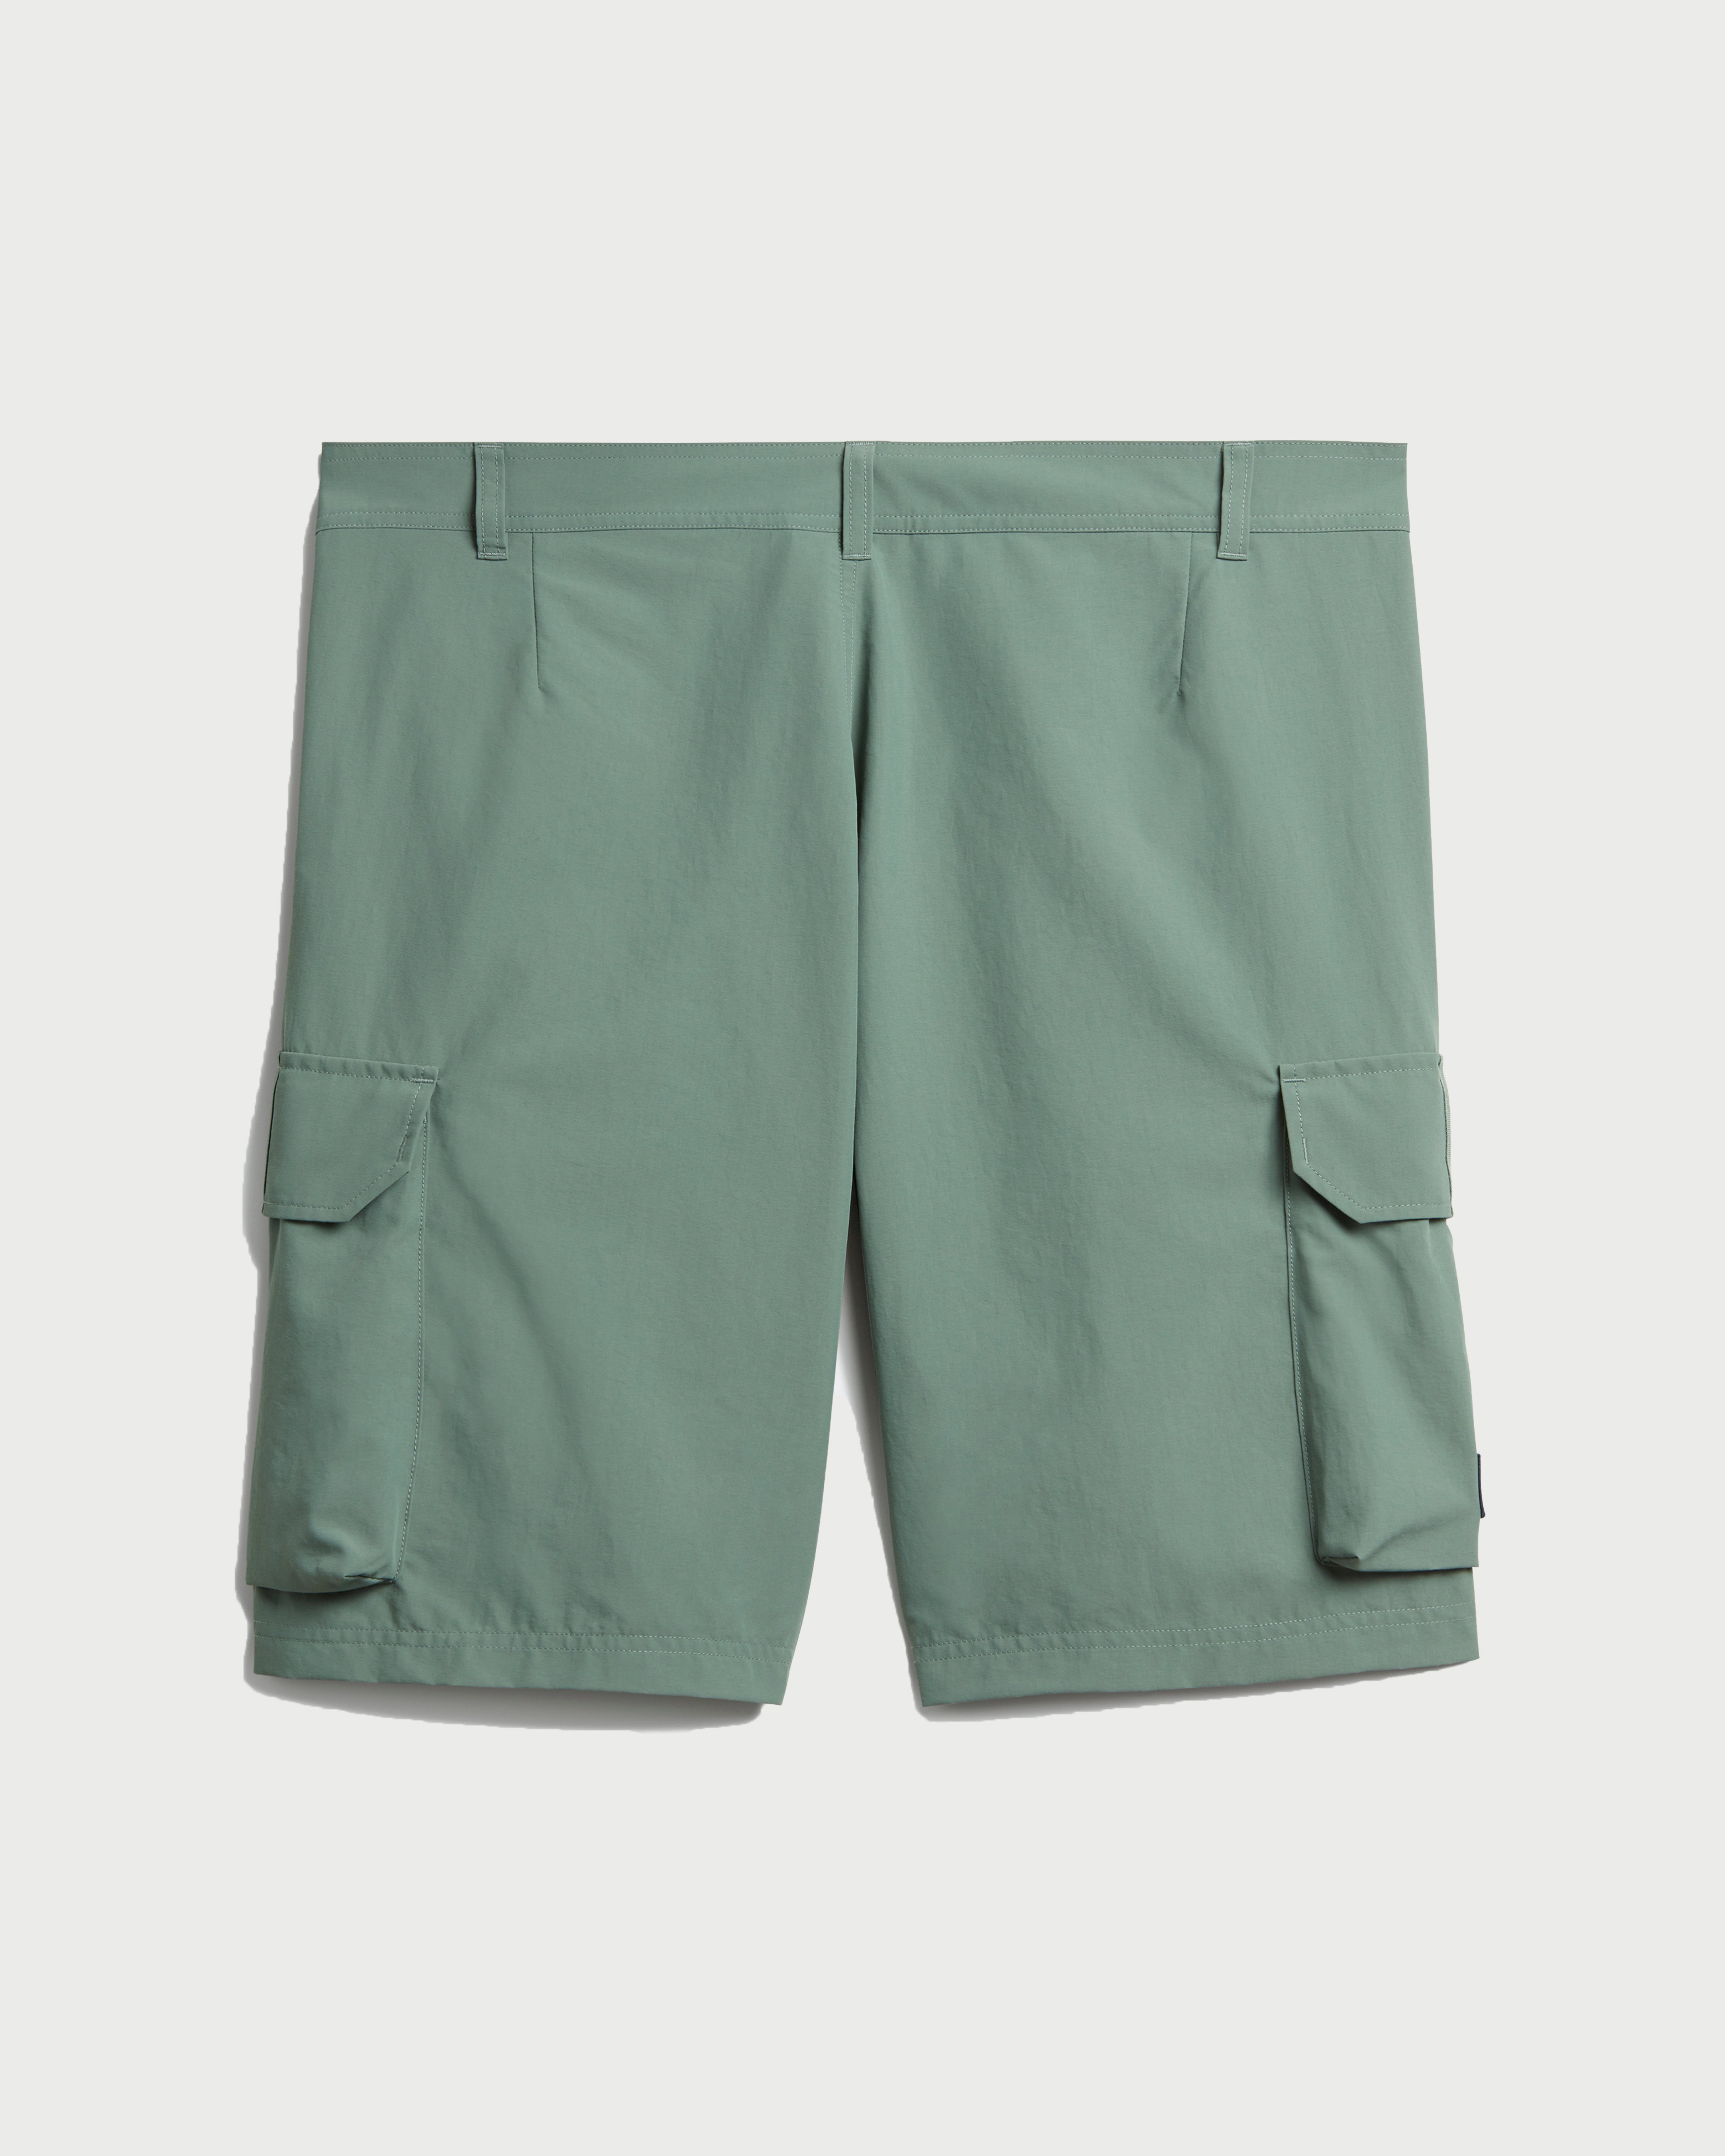 Adidas - Standish Shorts Spezial Green - Clothing - Green - Image 2